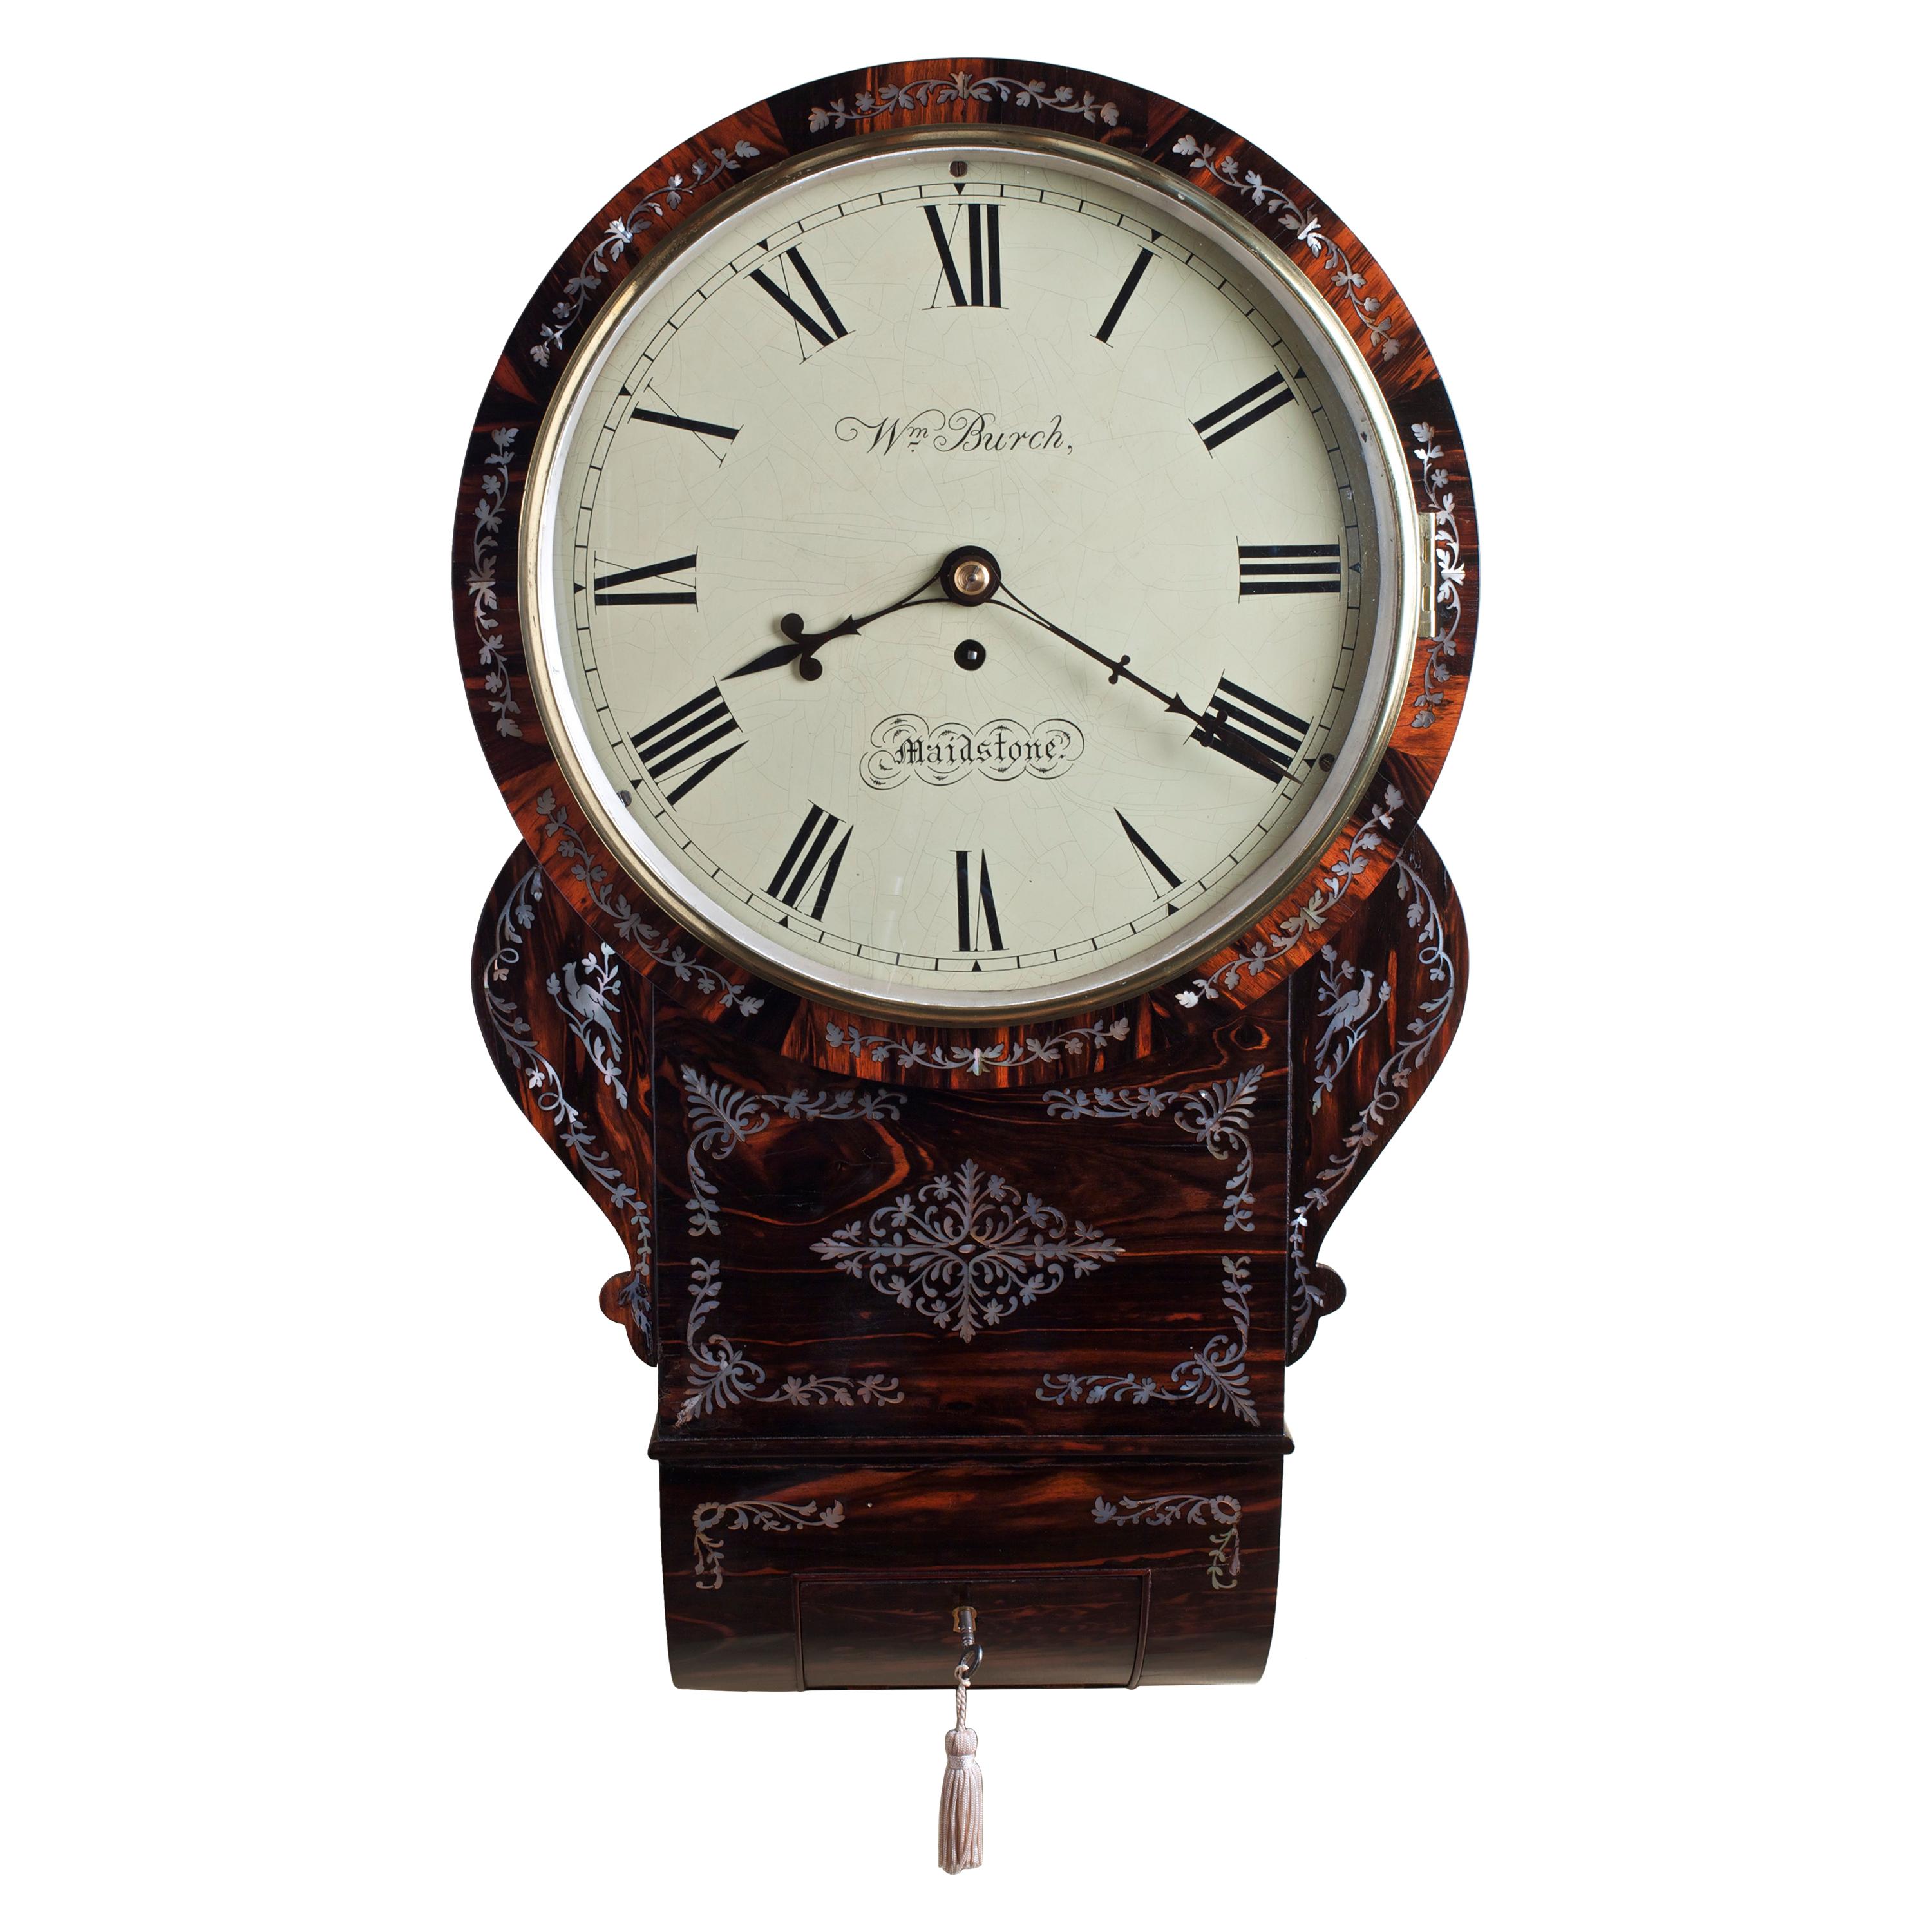 Regency English Coromandel Drop Dial Wall Clock by William Burch, Maidstone